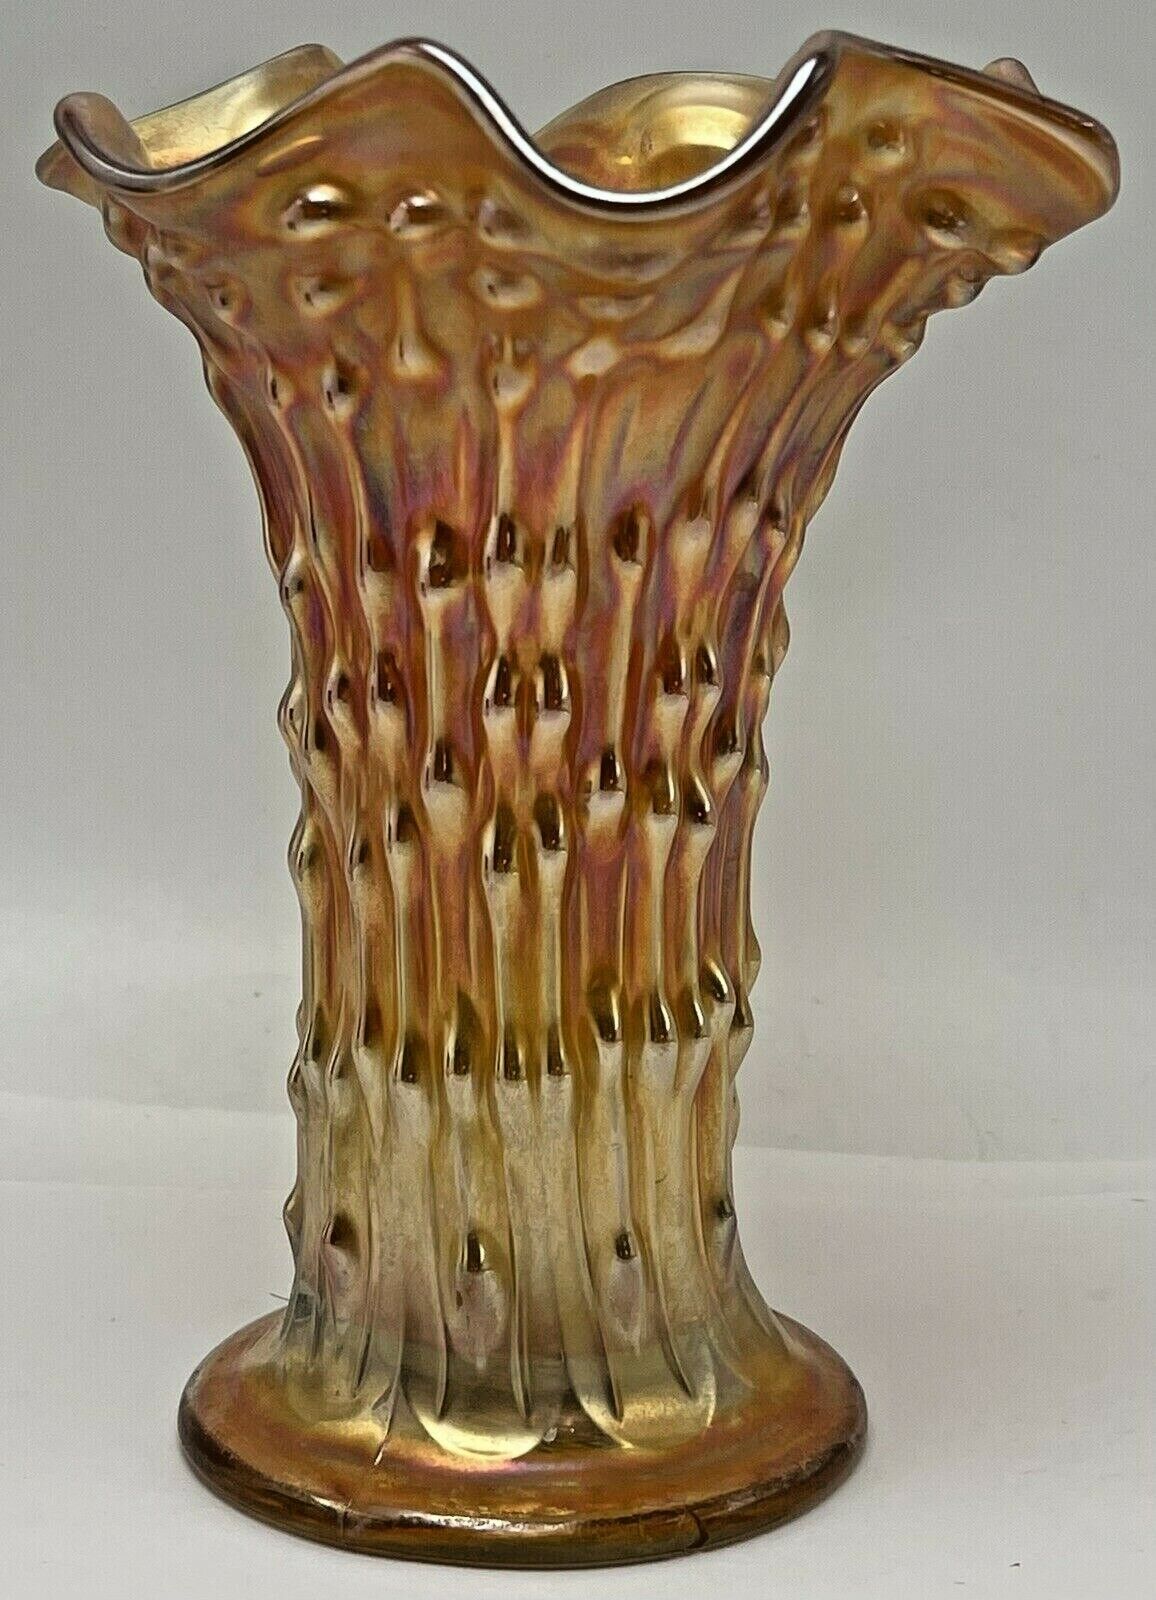 Vintage Fenton April Showers Marigold Carnival Iridescent Glass Vase Ruffled Rim